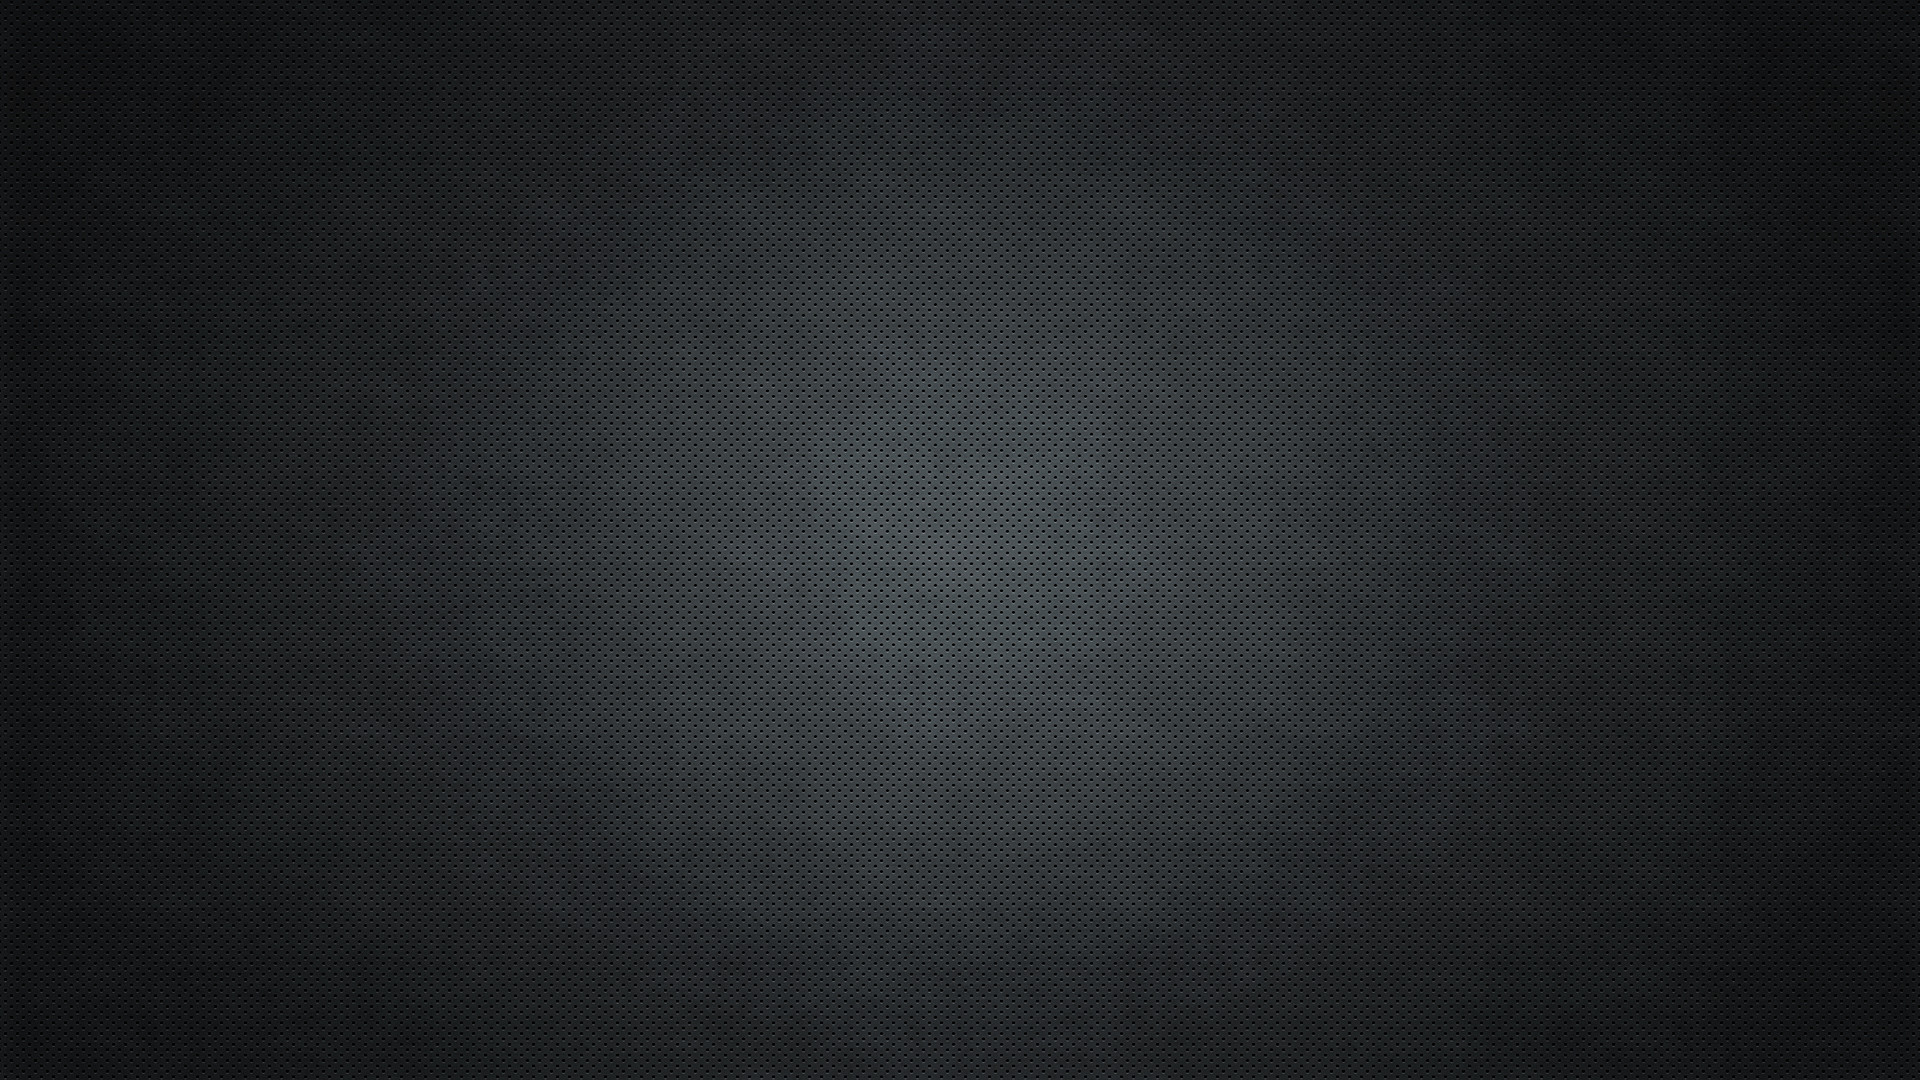 1920x1080 dark grey wallpaper 5D6 | Hd Wallpaper, Blue Wallpaper, Abstract Wallpaper,  Desktop Wallpaper, Pc Wallpaper, | Pinterest | Dark grey wallpaper, Dark  grey ...